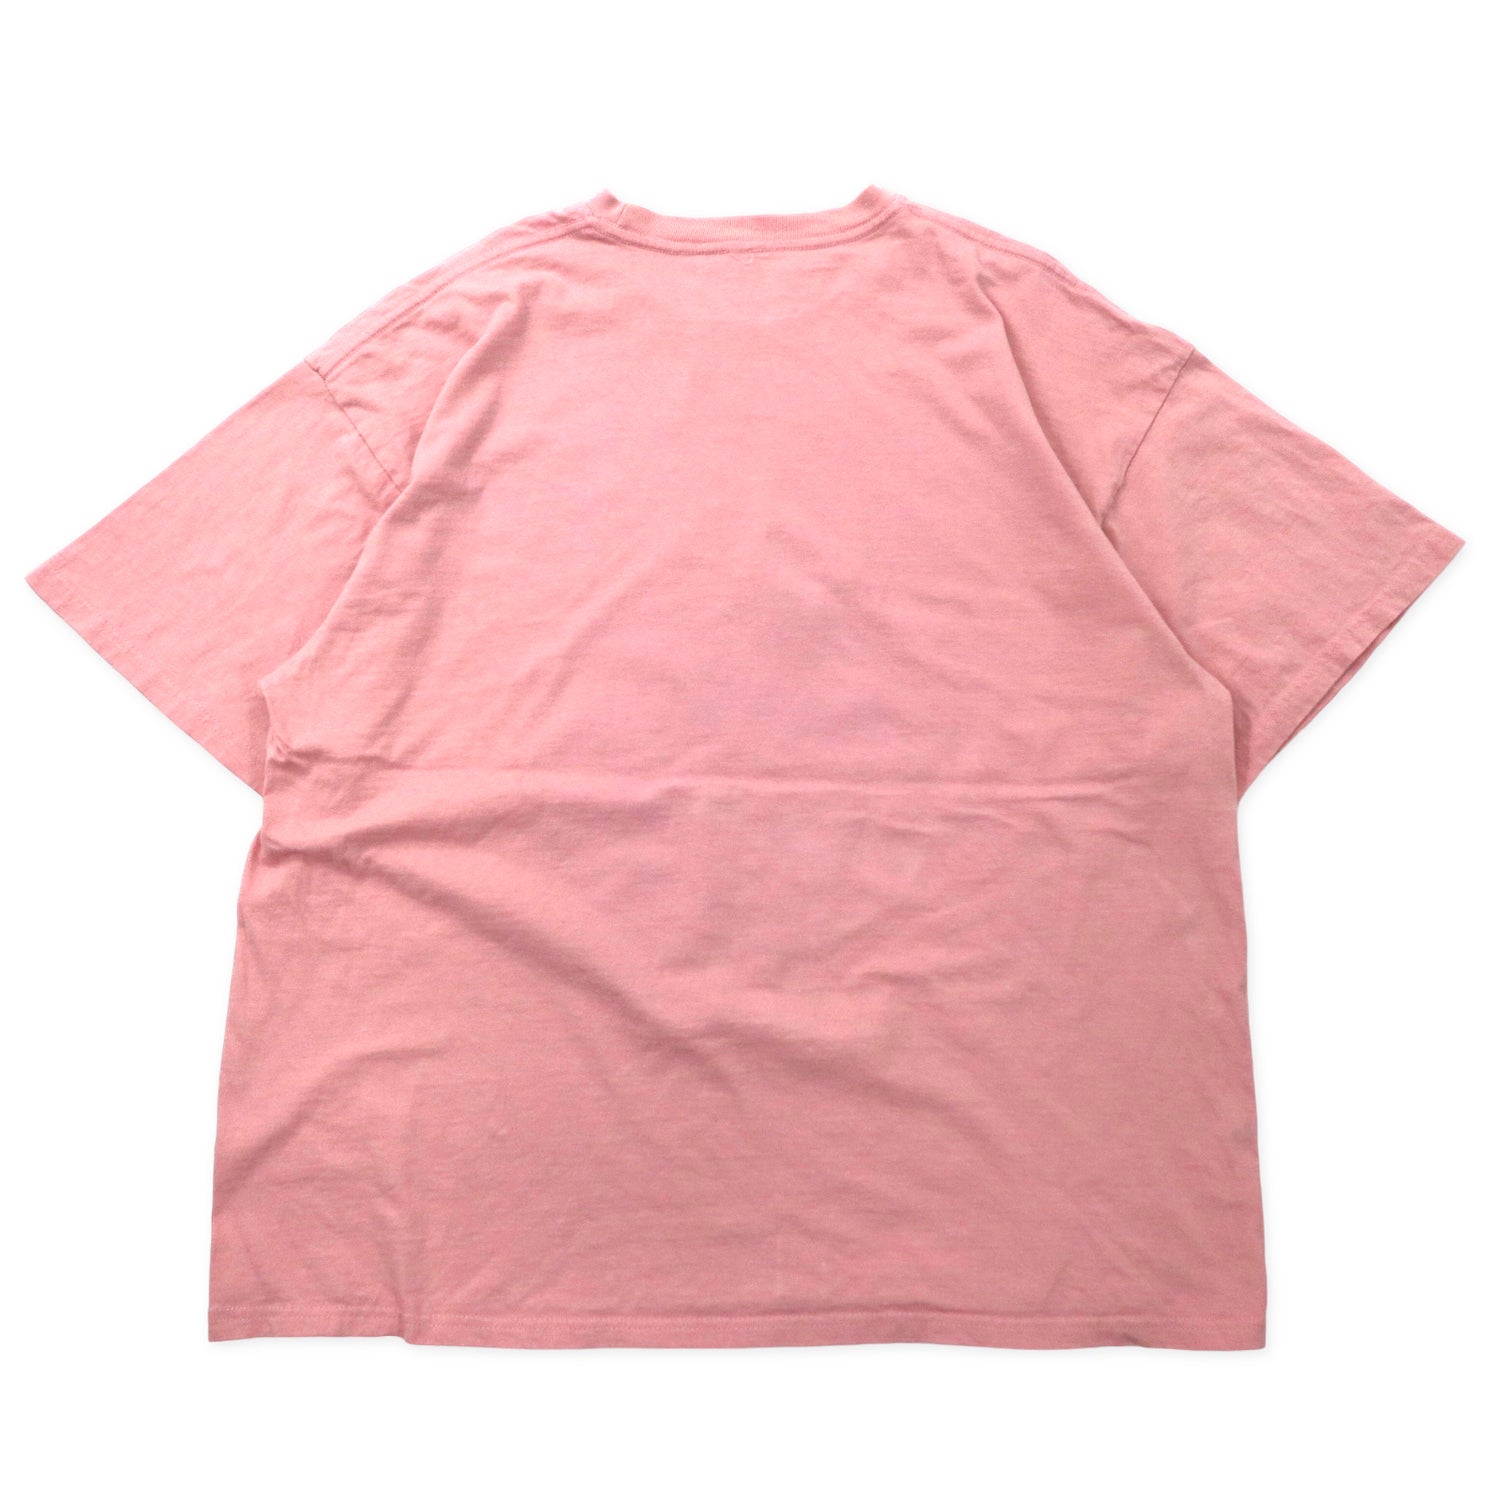 NIRVANA Nilvana Band T-Shirt XL Pink Cotton Big Size – 日本然リトテ